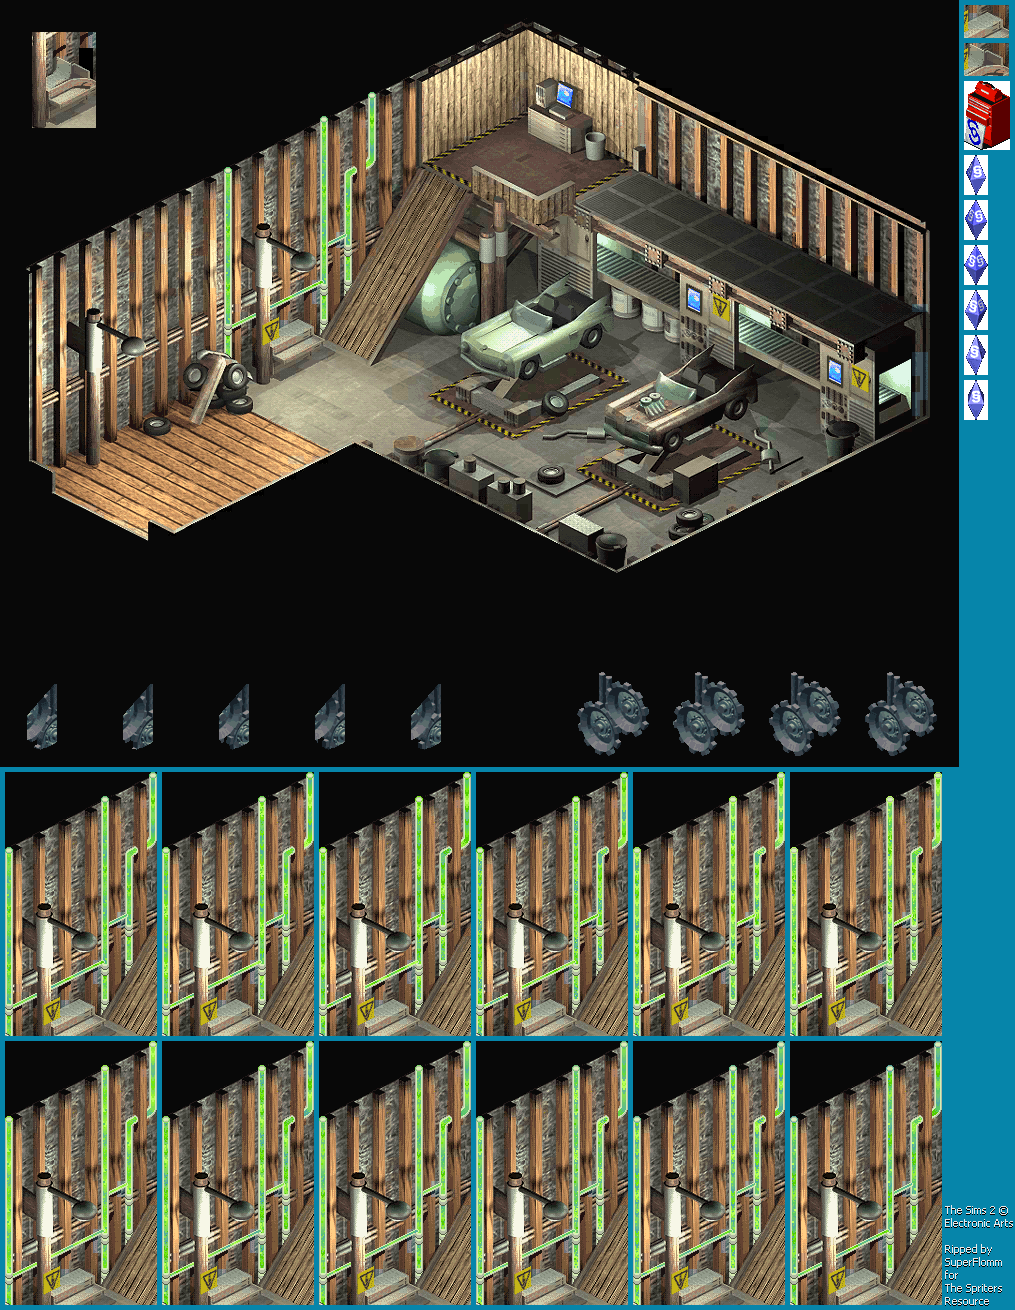 The Sims 2 - Optimum's Tech Factory